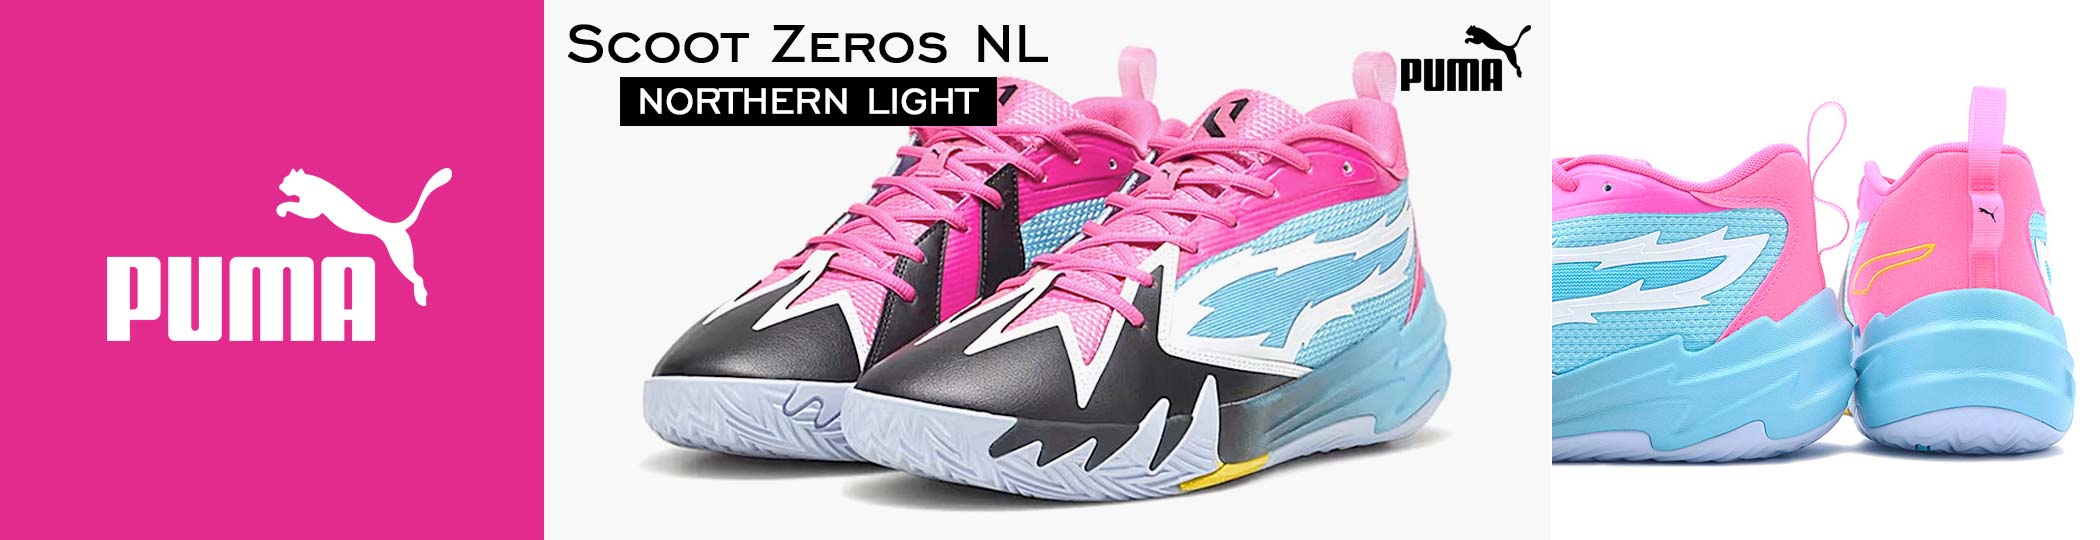 Puma SCOOT ZEROS NL - Northern Light